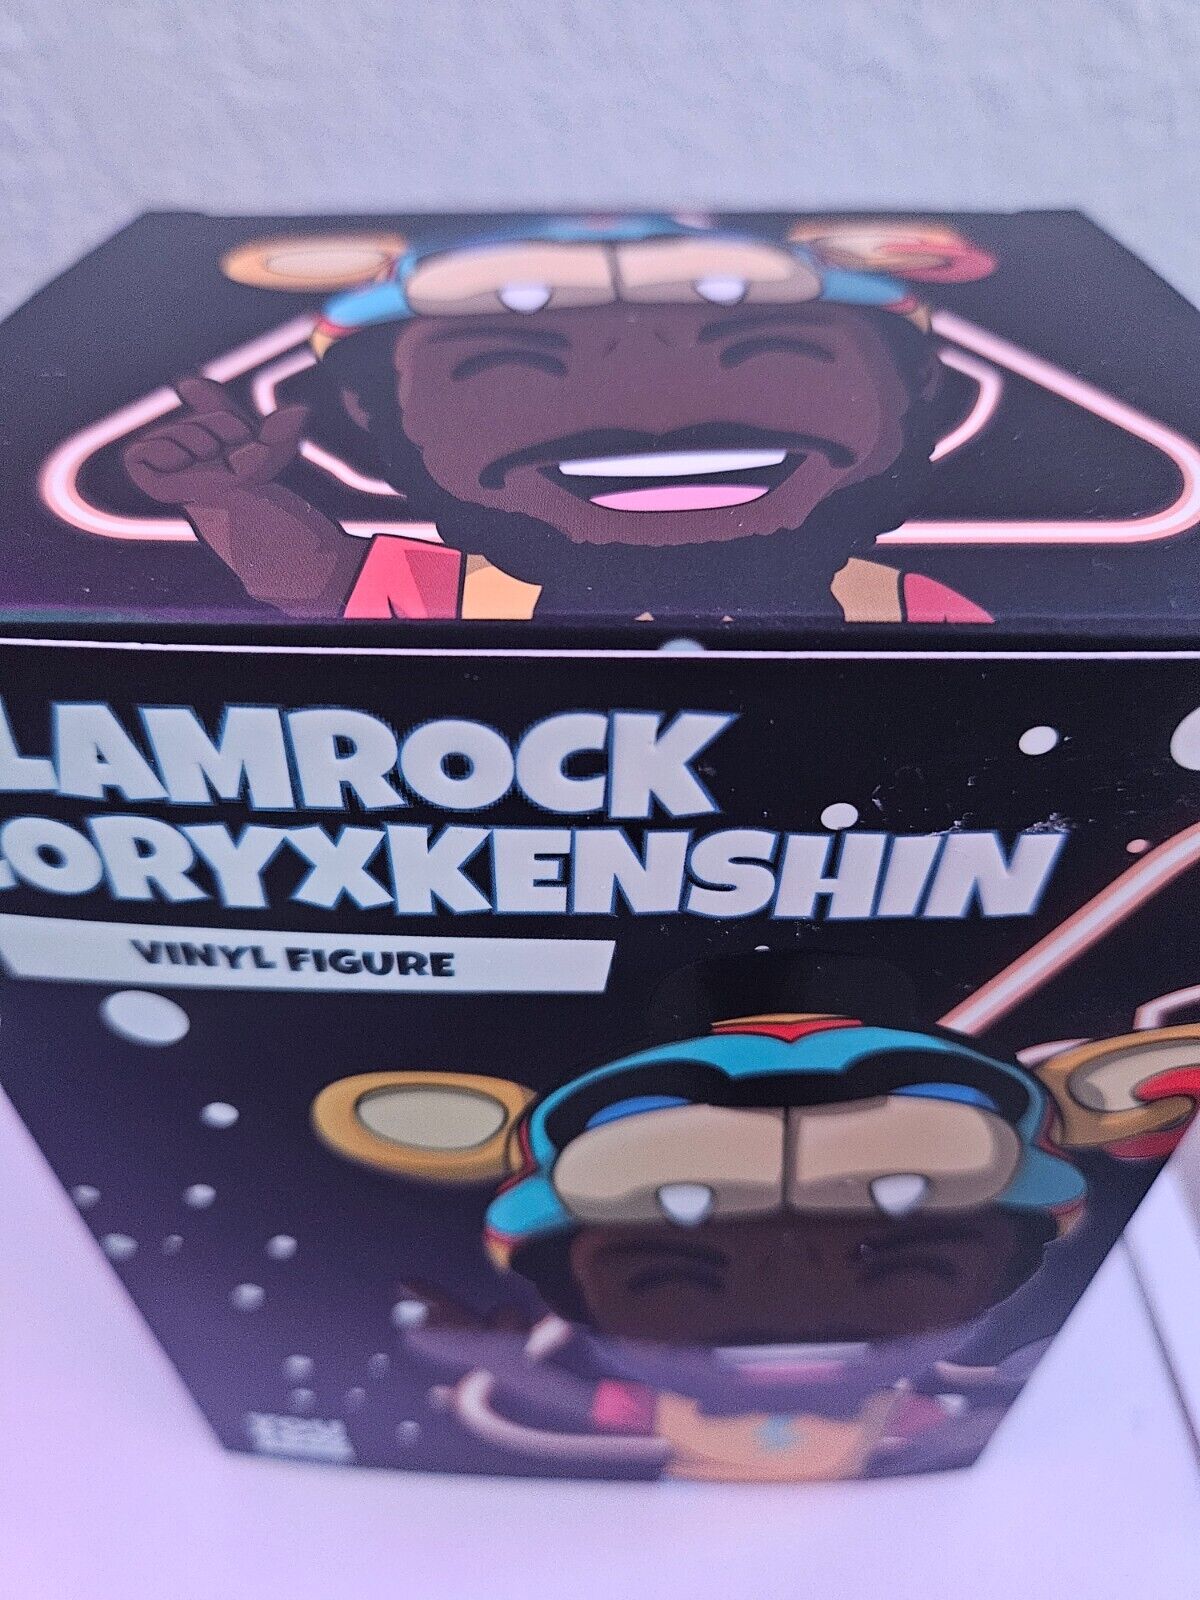 CoryxKenshin Glamrock (FNAF) LIMITED EDITION by YouTooz (Original Packaging)